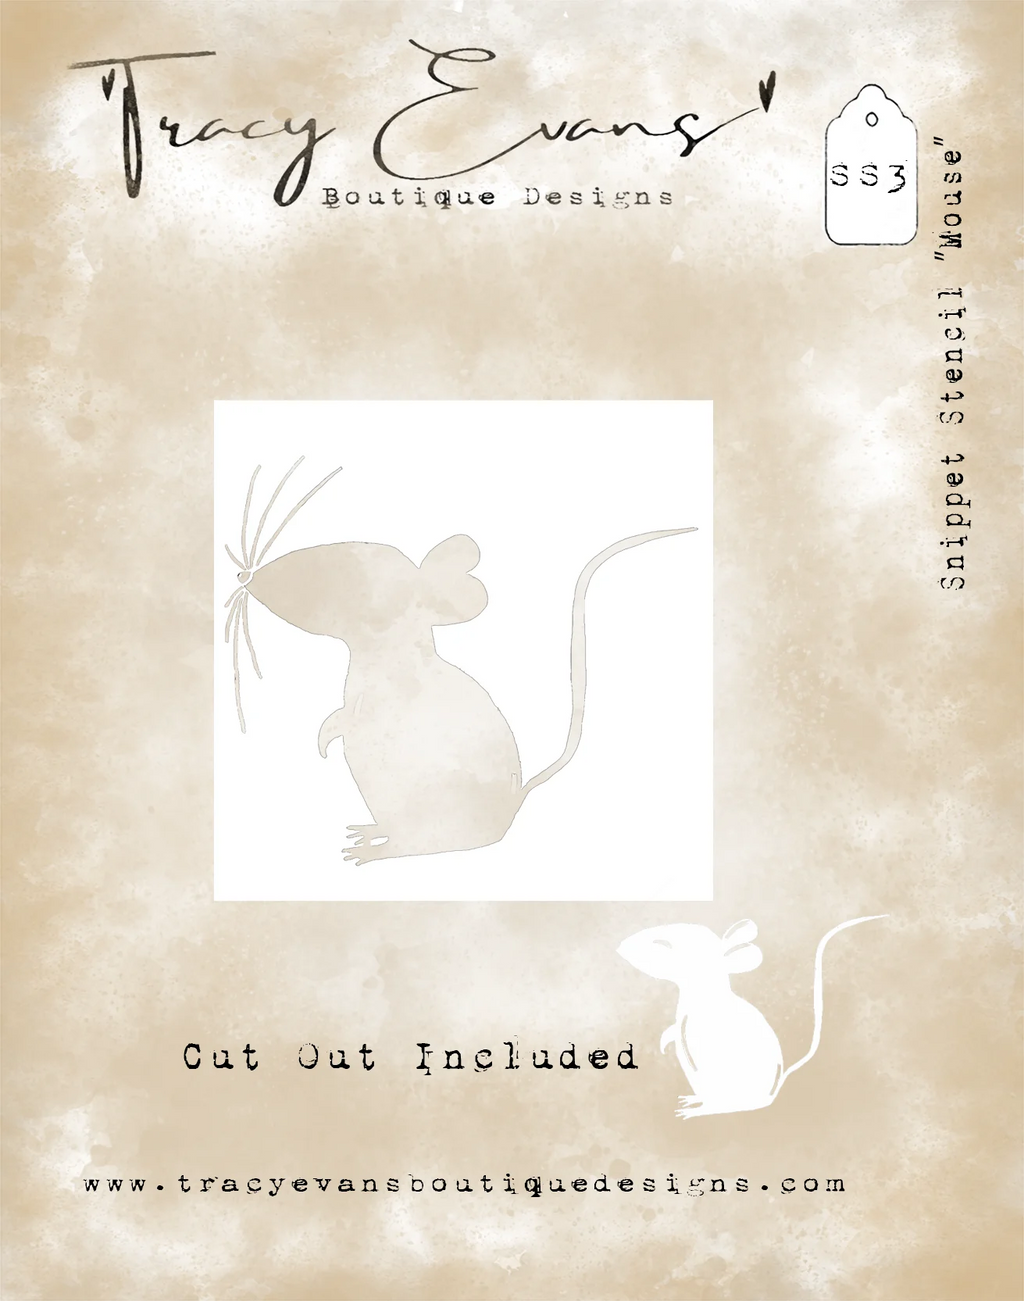 Tracy Evans Boutique Designs - Snippet Stencil - 4 x 4 - Mouse